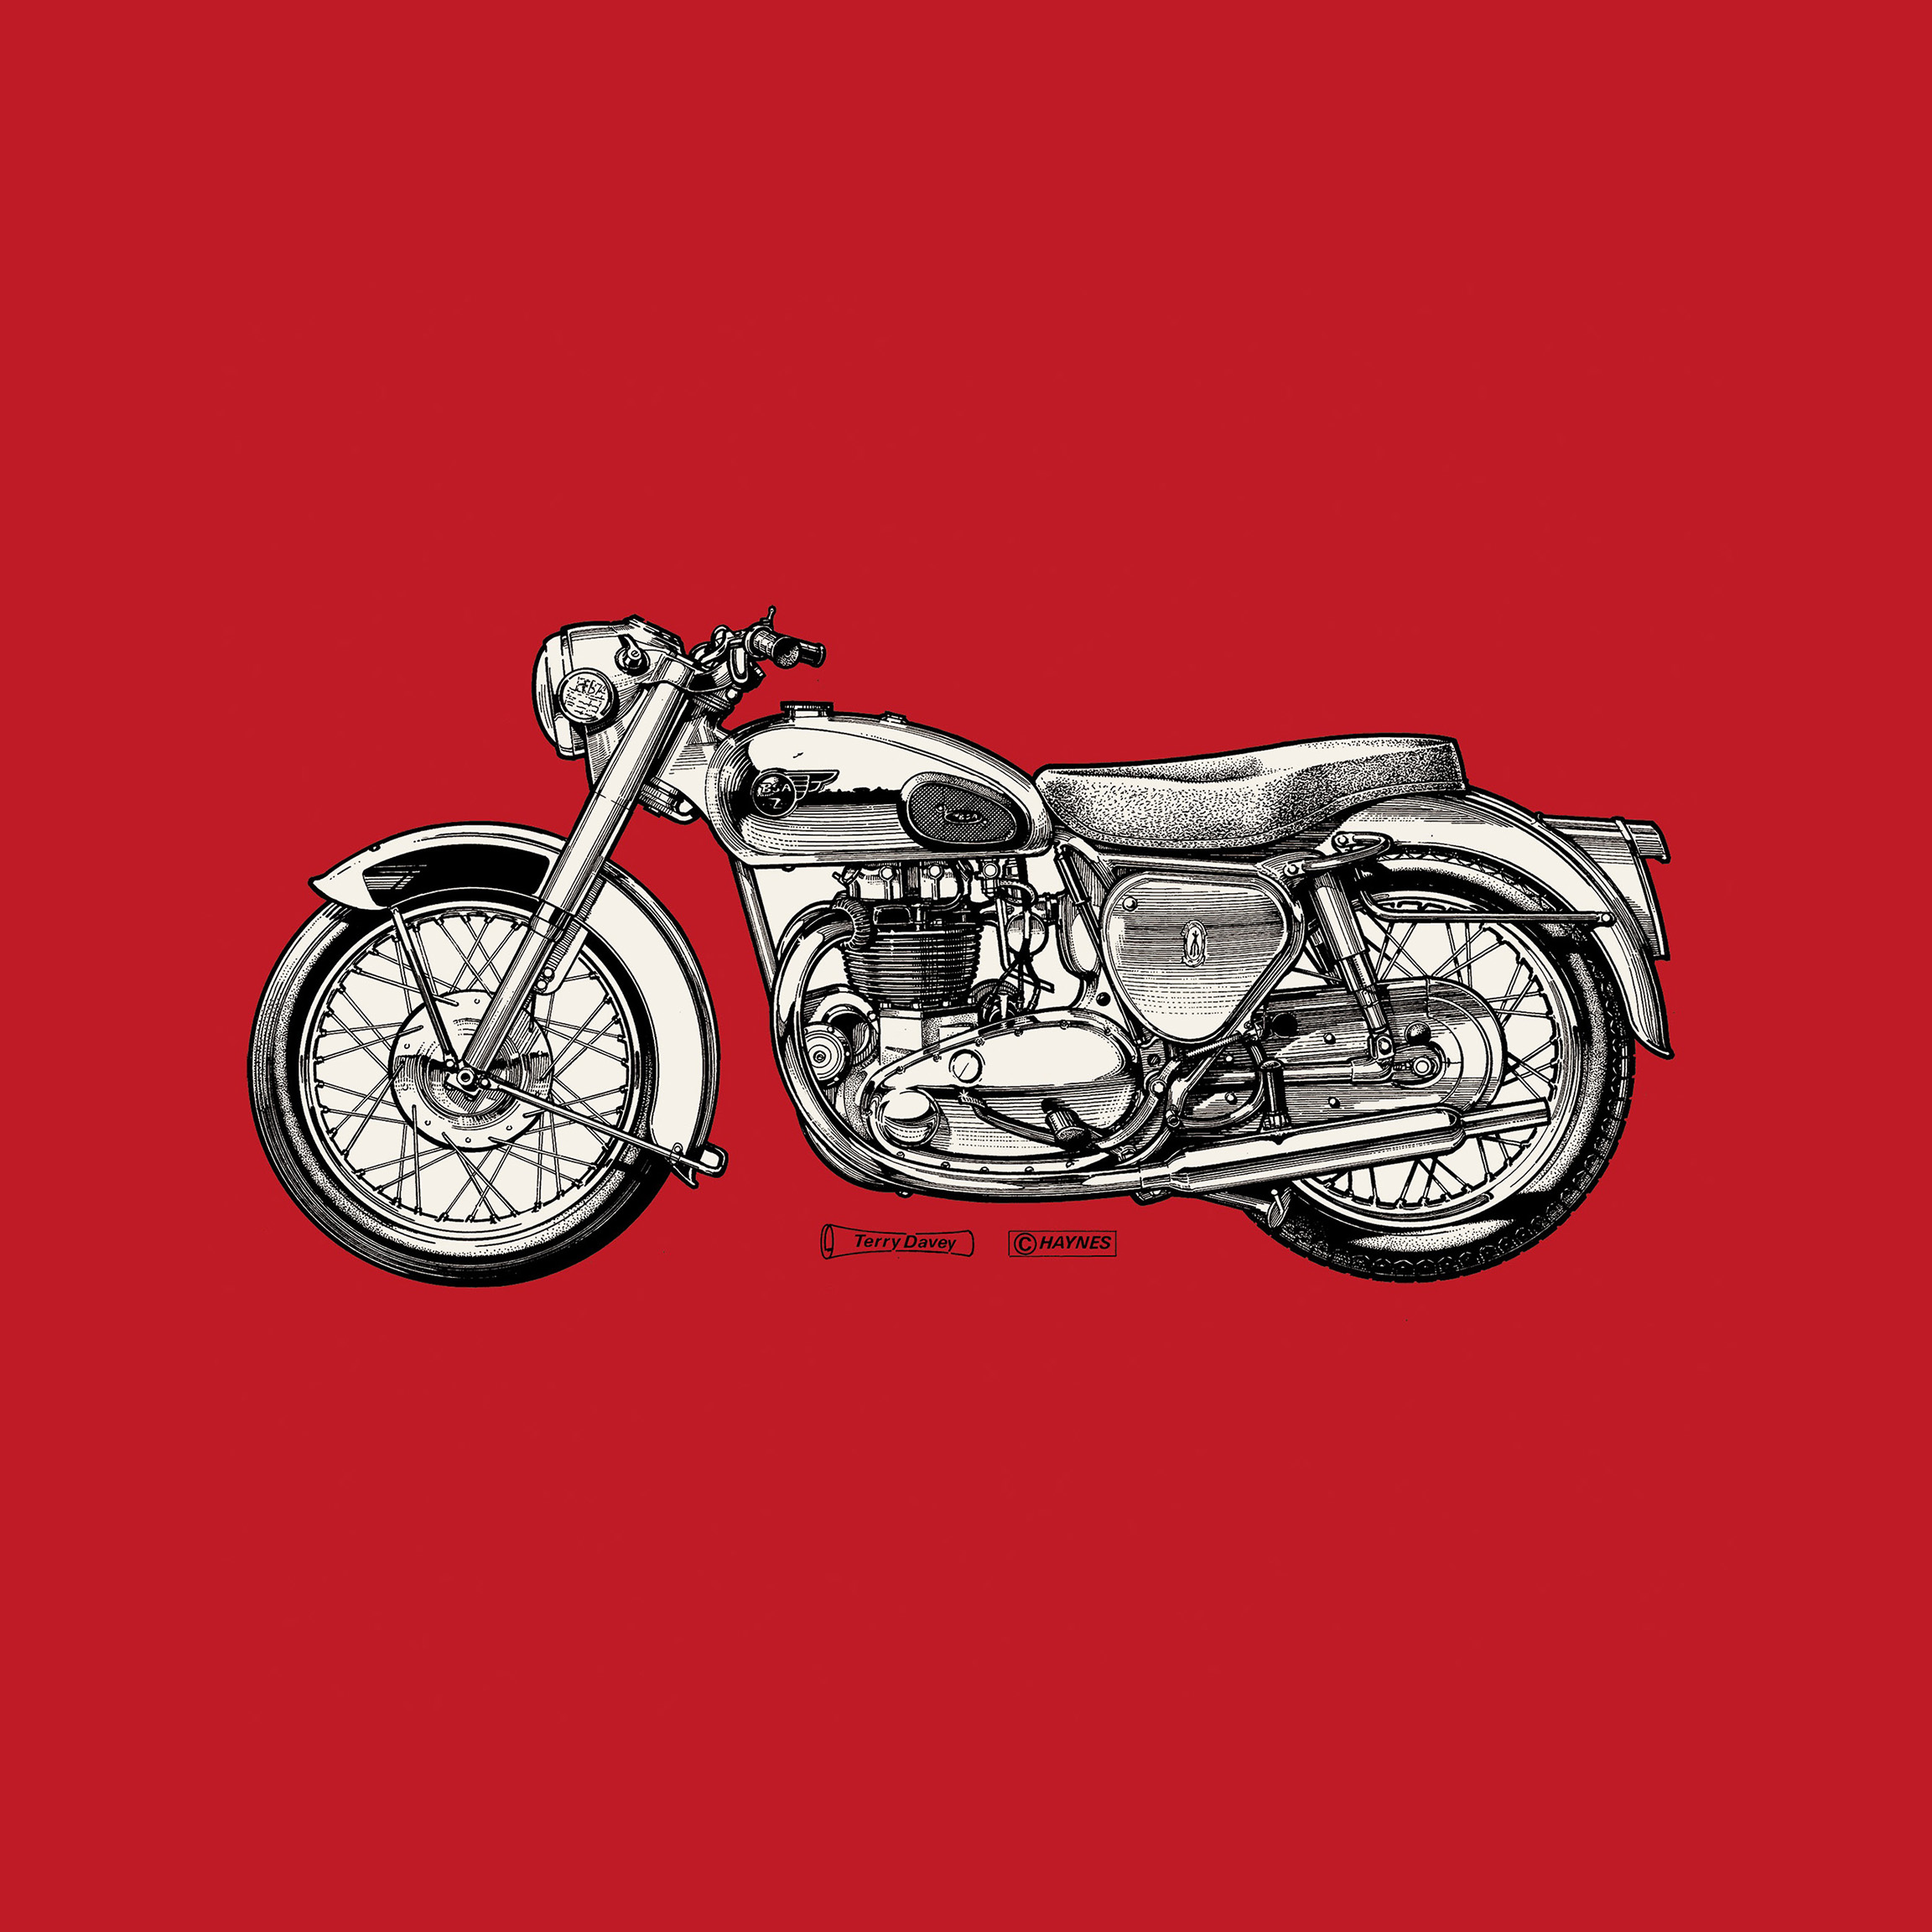 Deep Red Motorcycle' Wallpaper Mural | SurfaceView